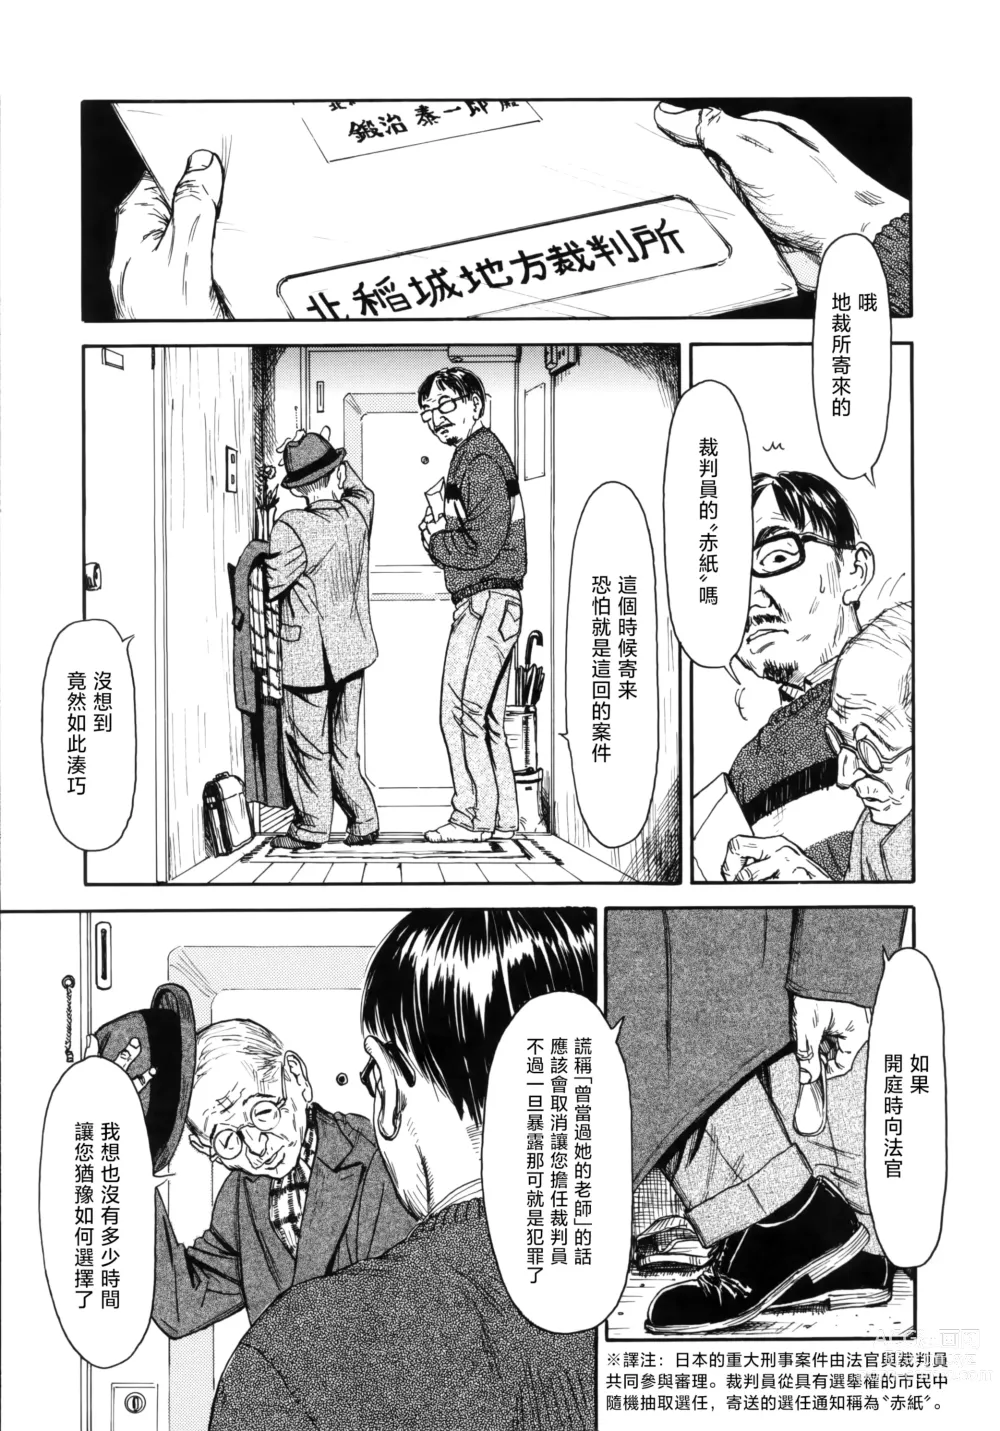 Page 19 of manga Mezame